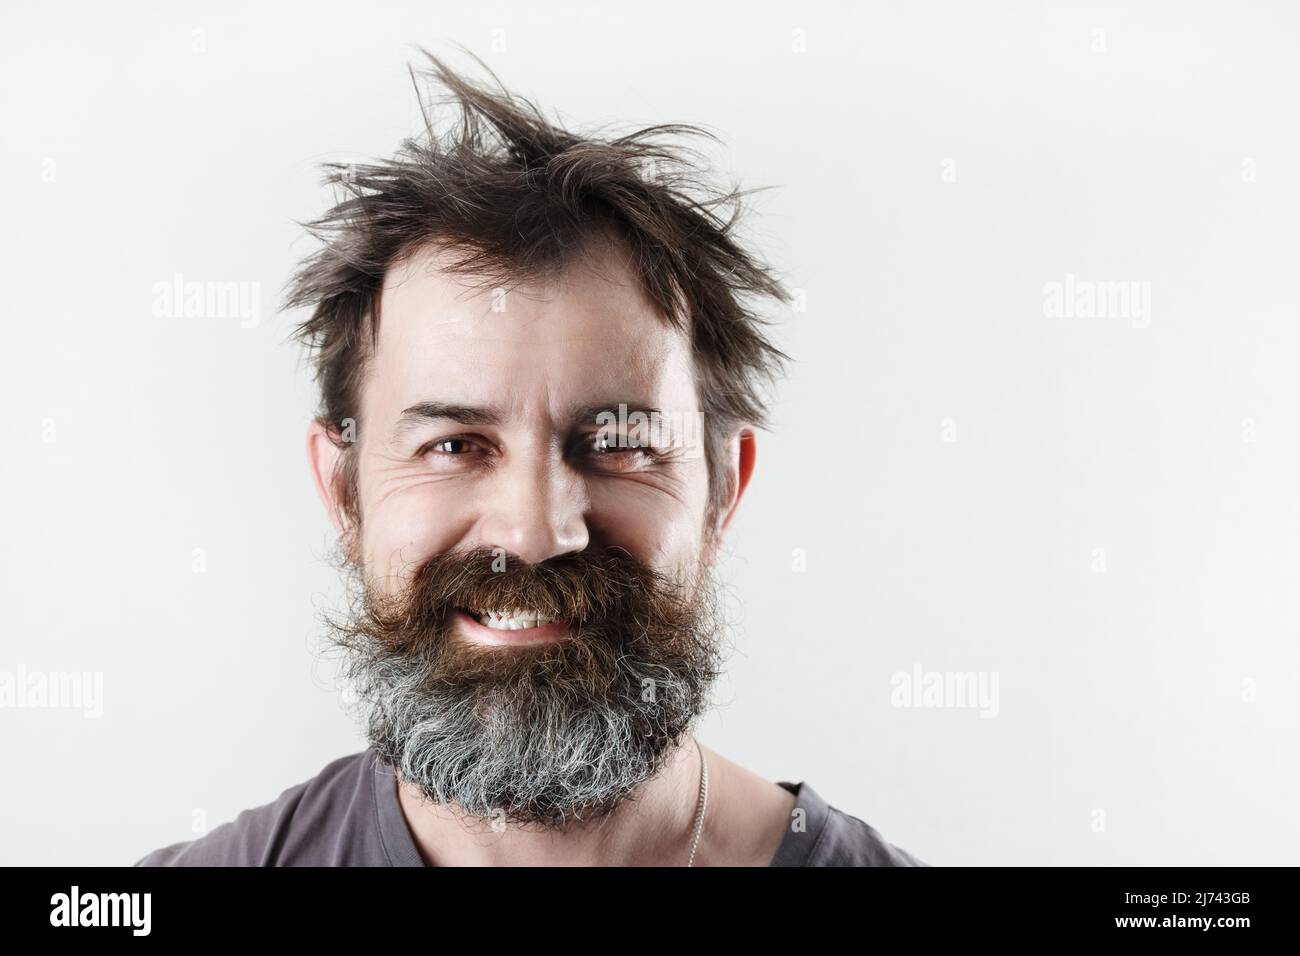 Happy smiling bearded shaggy man. Studio portrait of an unshaven man. Stock Photo